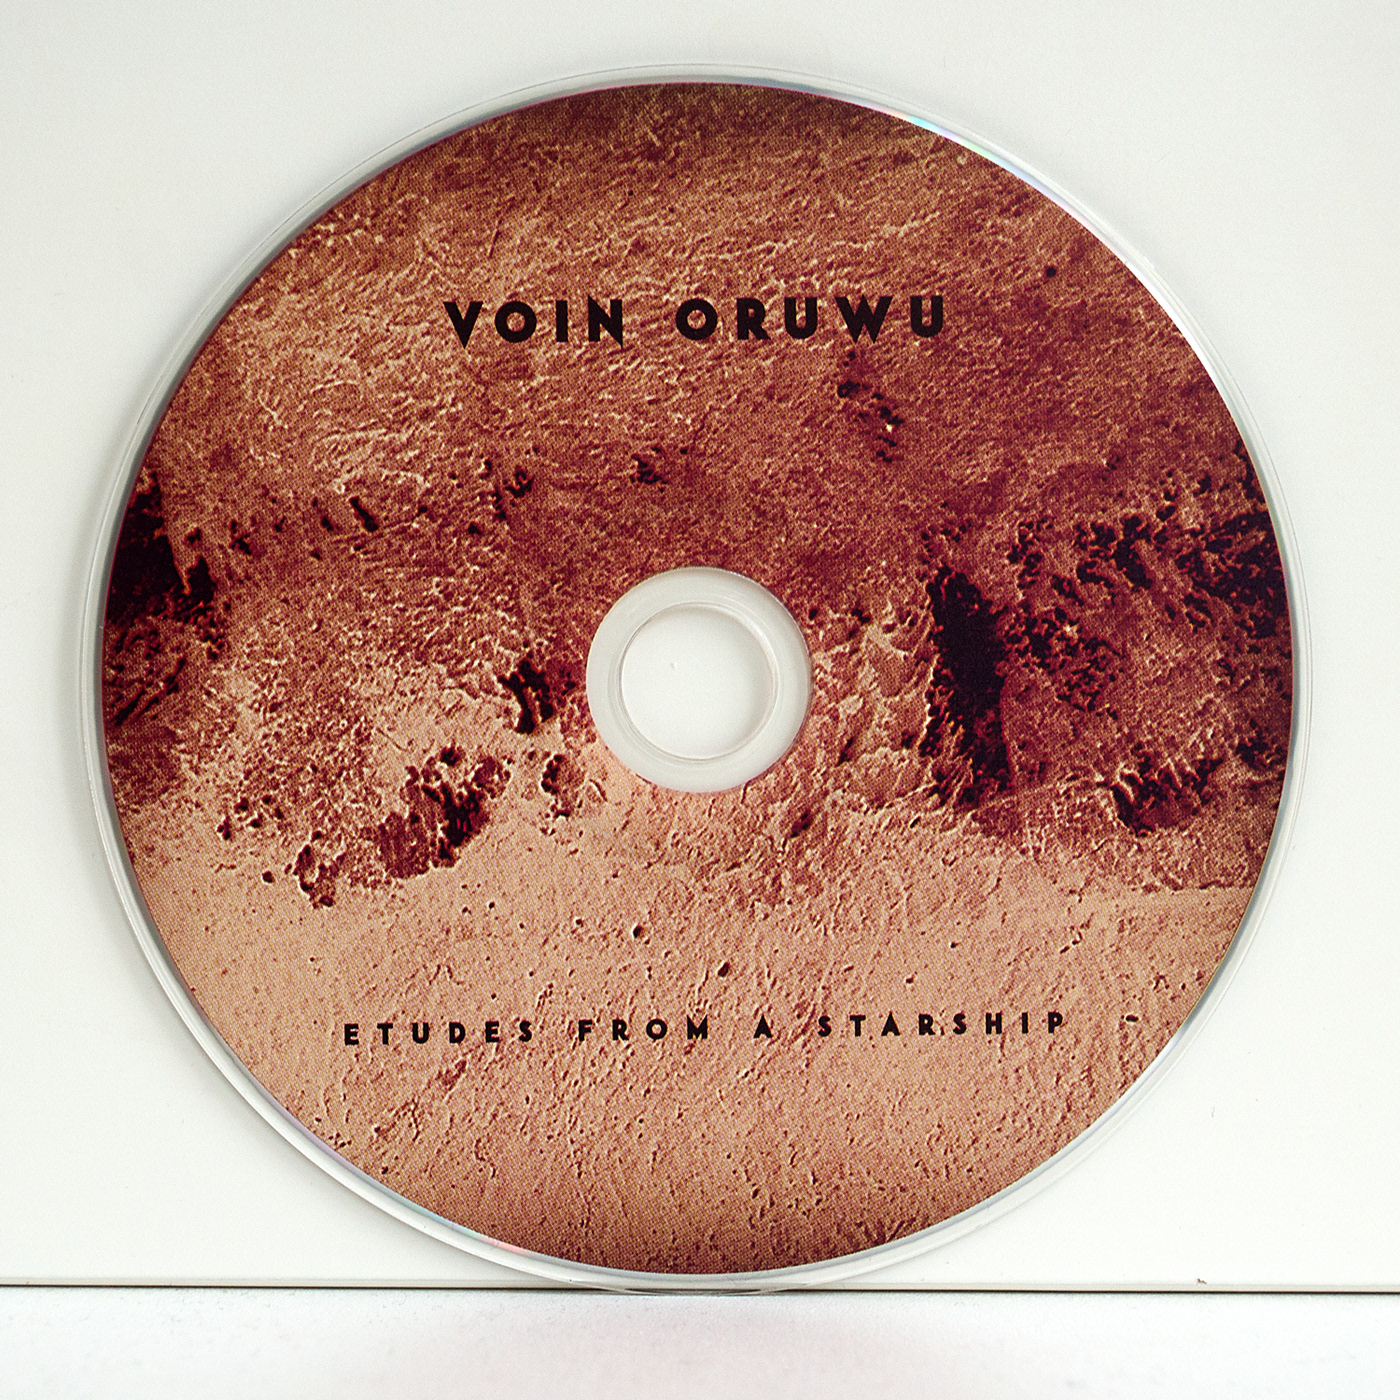 voin oruwu Kvitnu Zavoloka cover artwork dmytro fedorenko cd electronic music experimental music art painting  